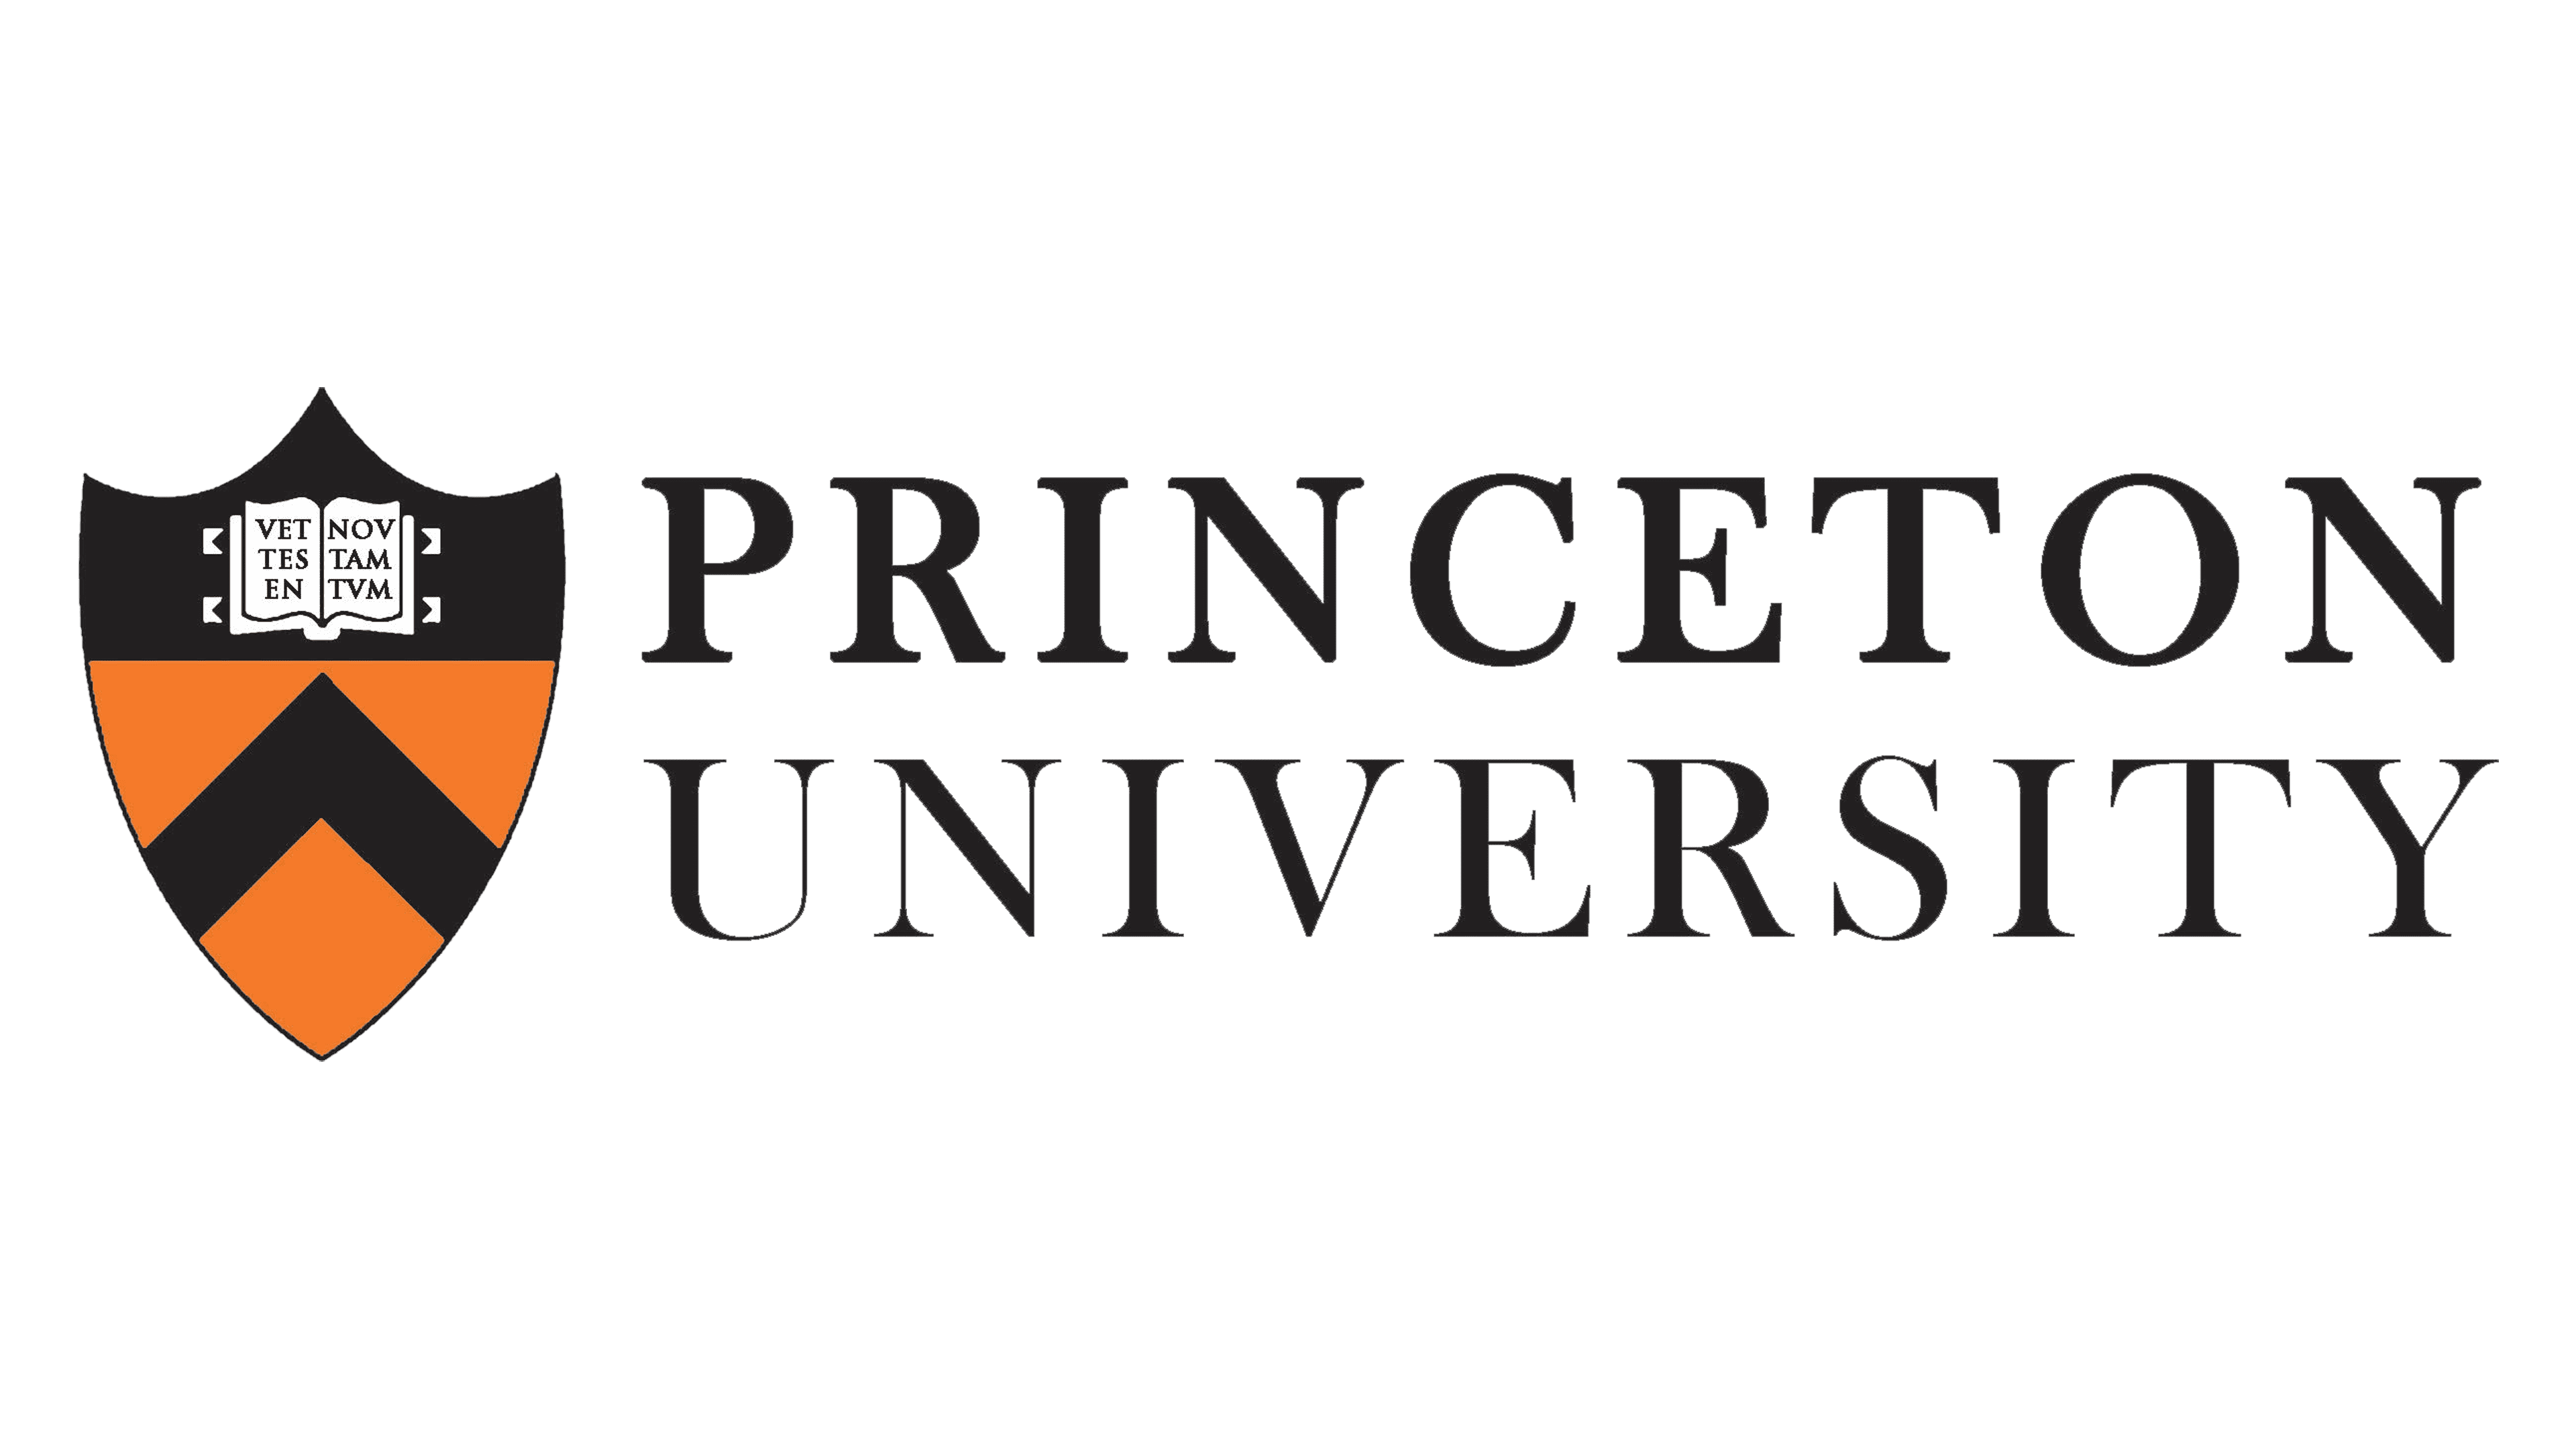 University of Princeton Λογότυπο και σύμβολο, έννοια, ιστορία, PNG, μάρκα